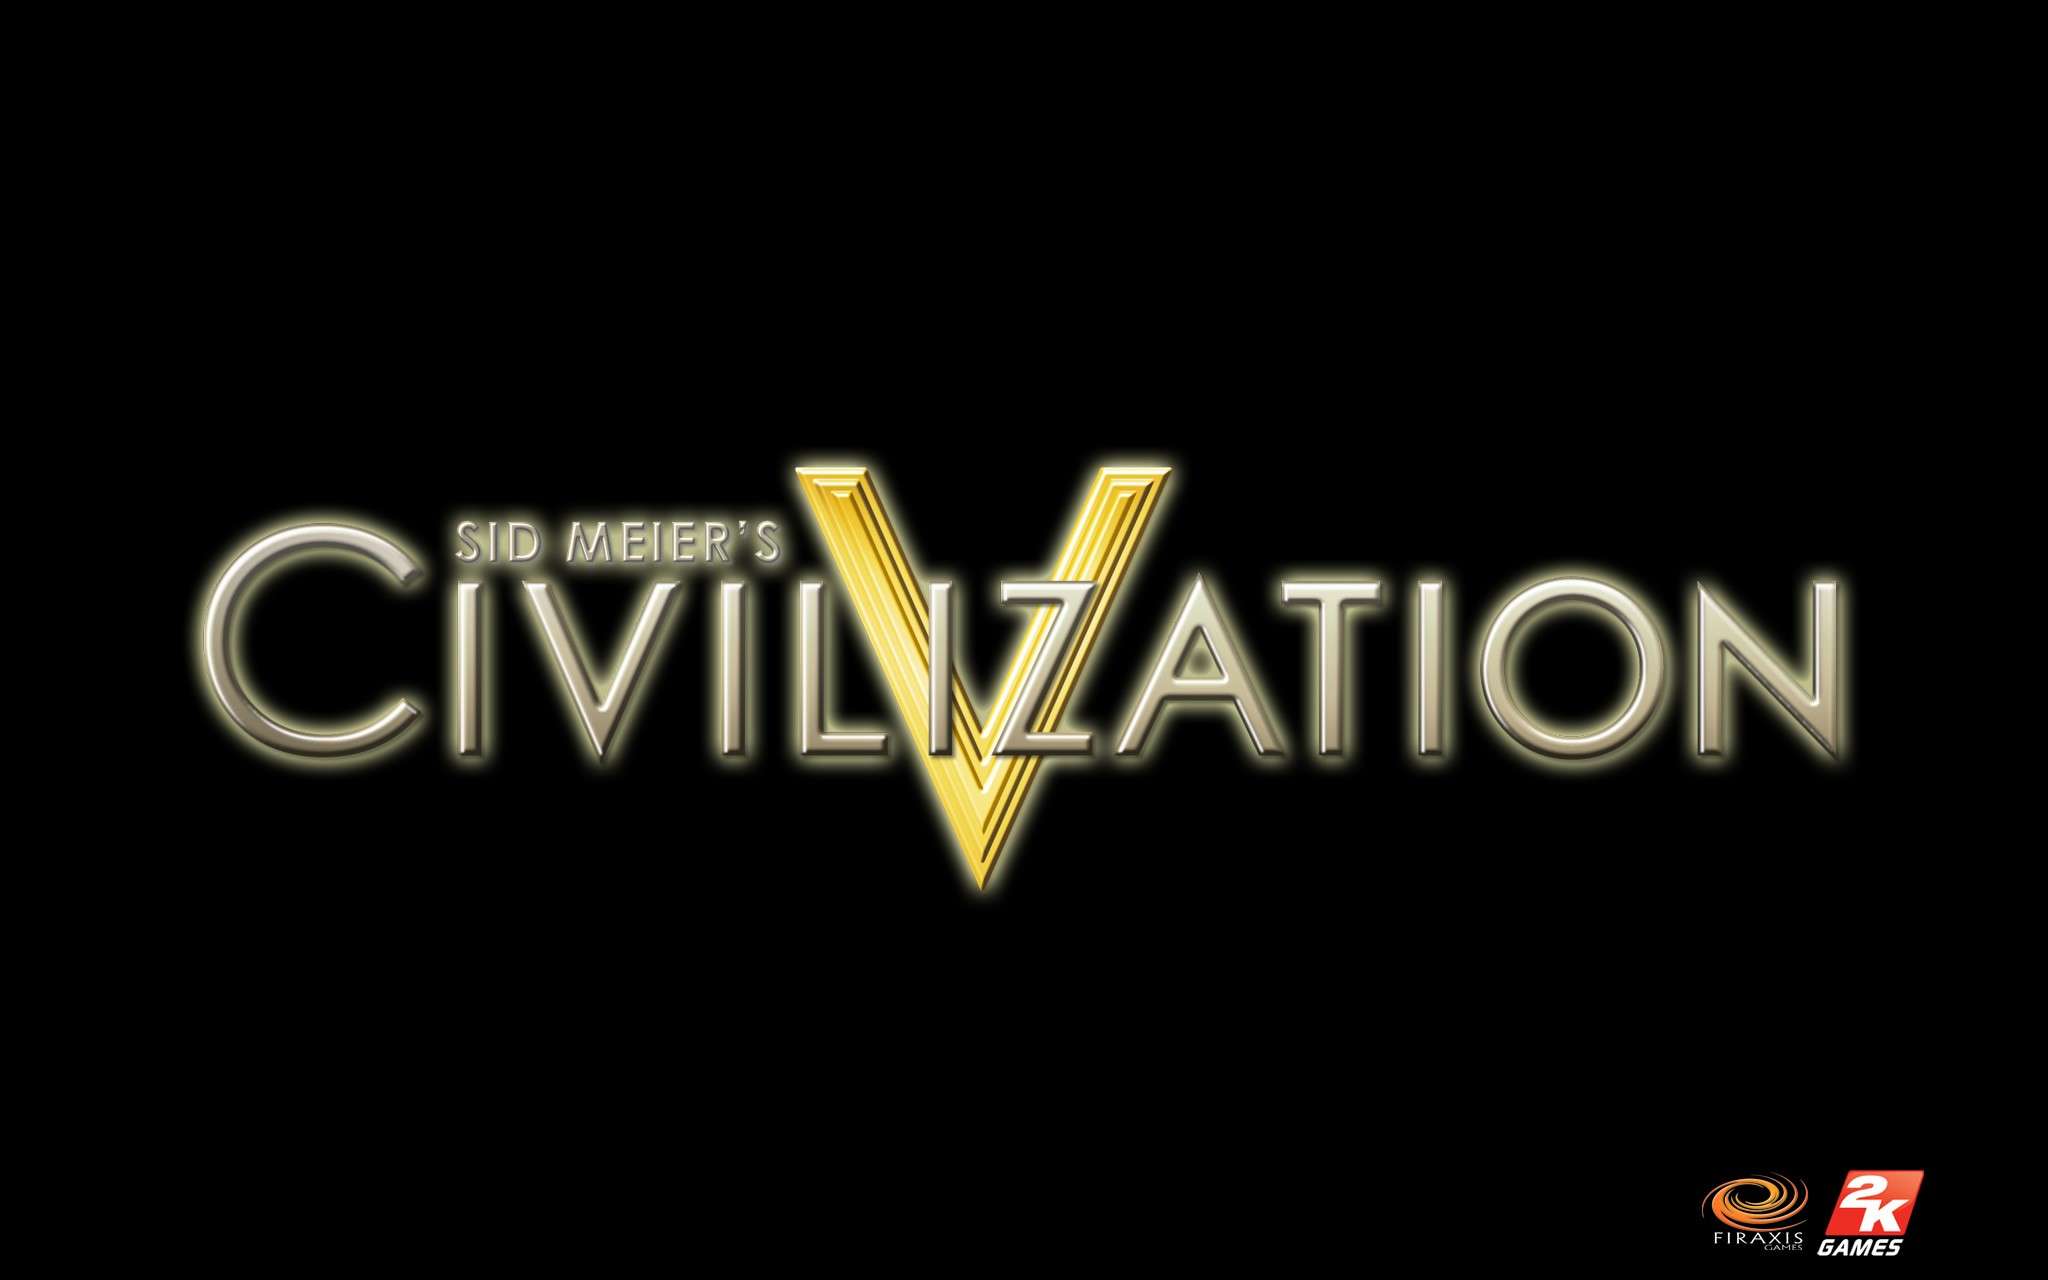 Civilization V - rzut narządem wzroku